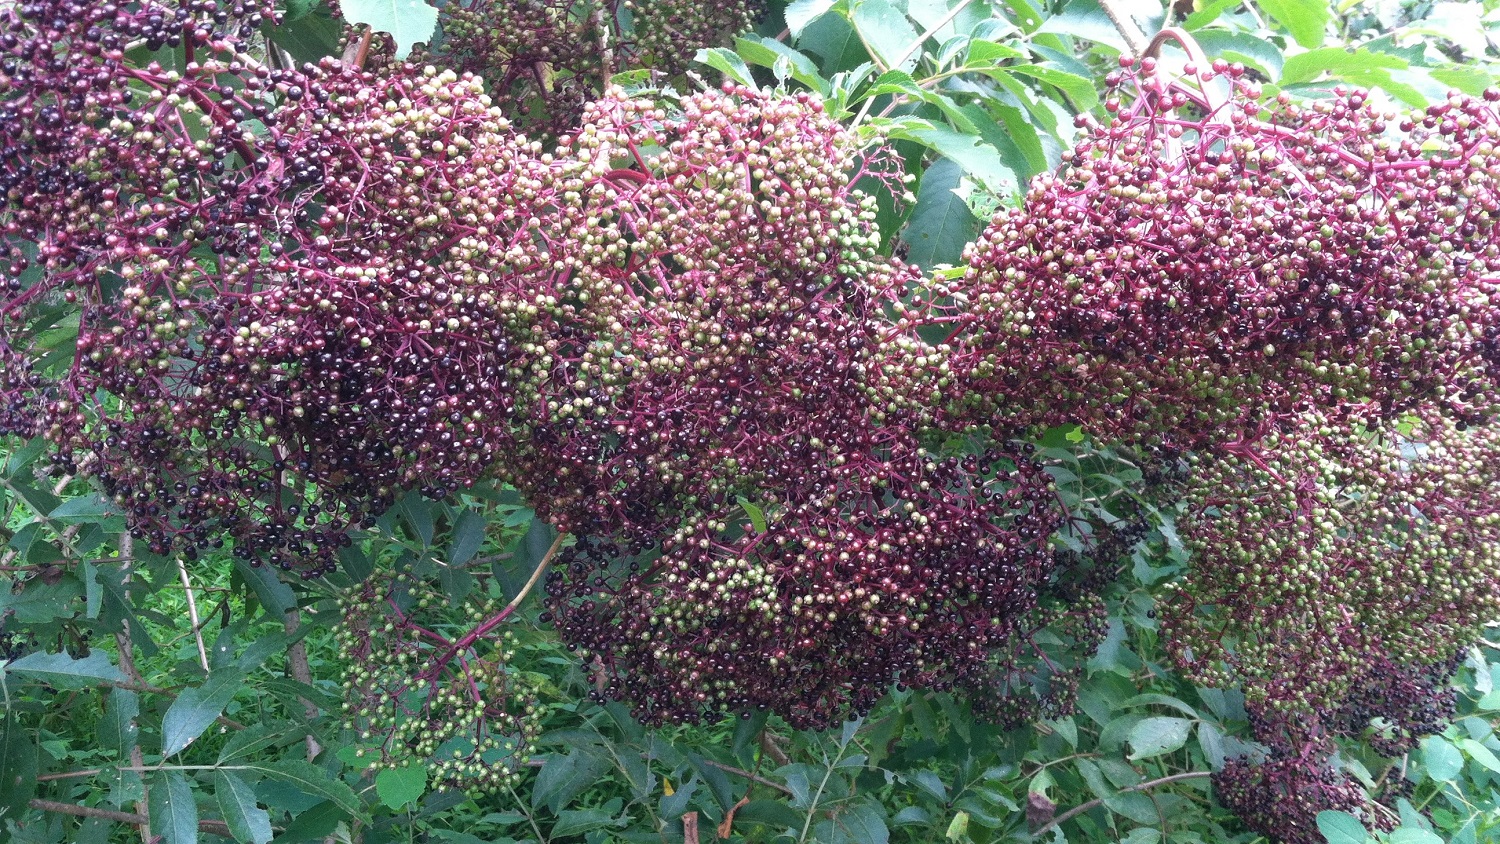 Elderberry bushes ripening